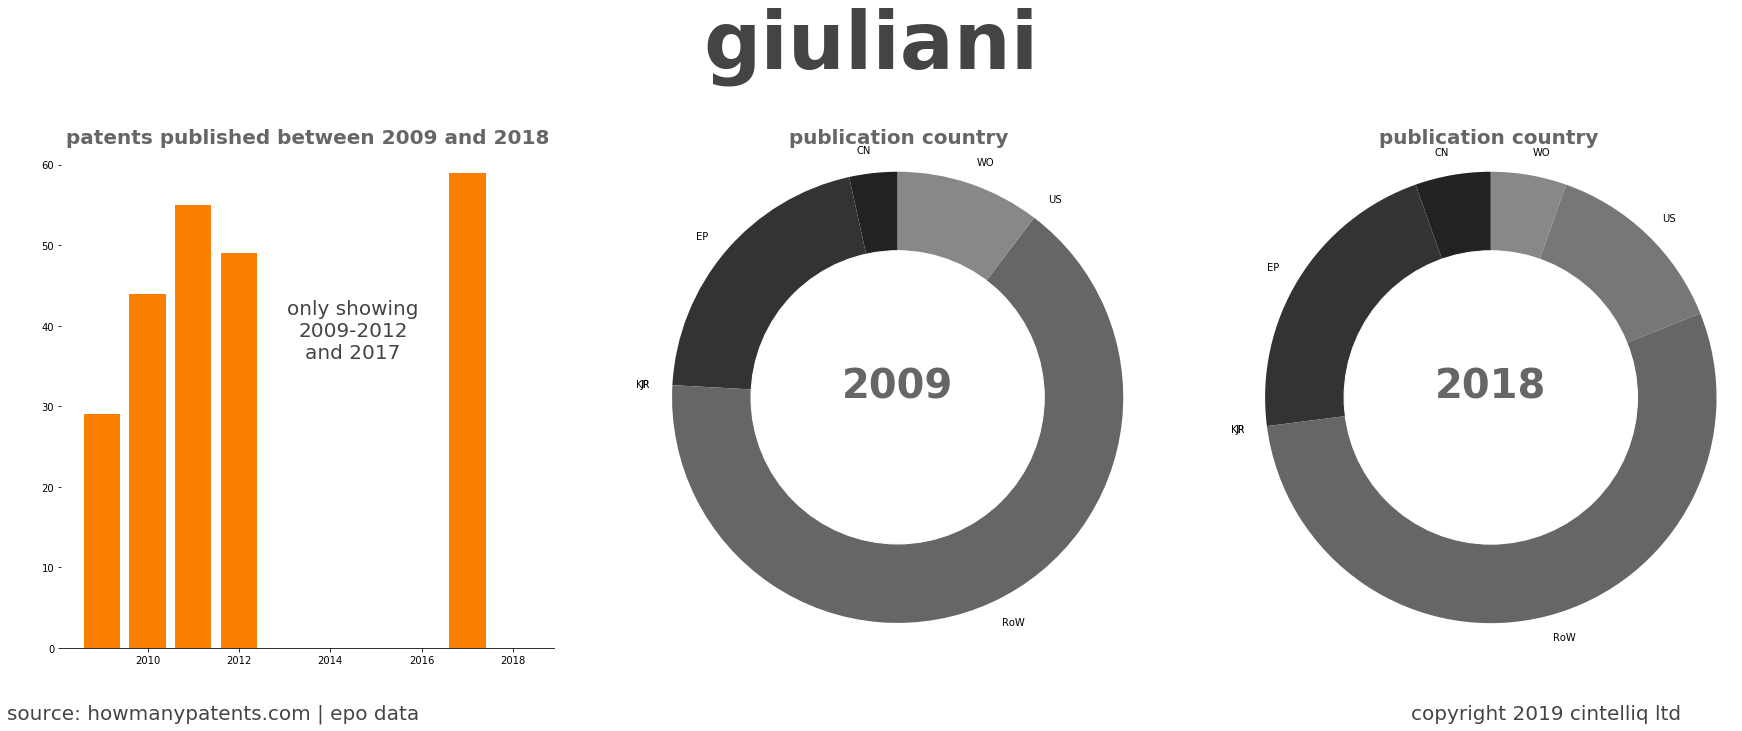 summary of patents for Giuliani